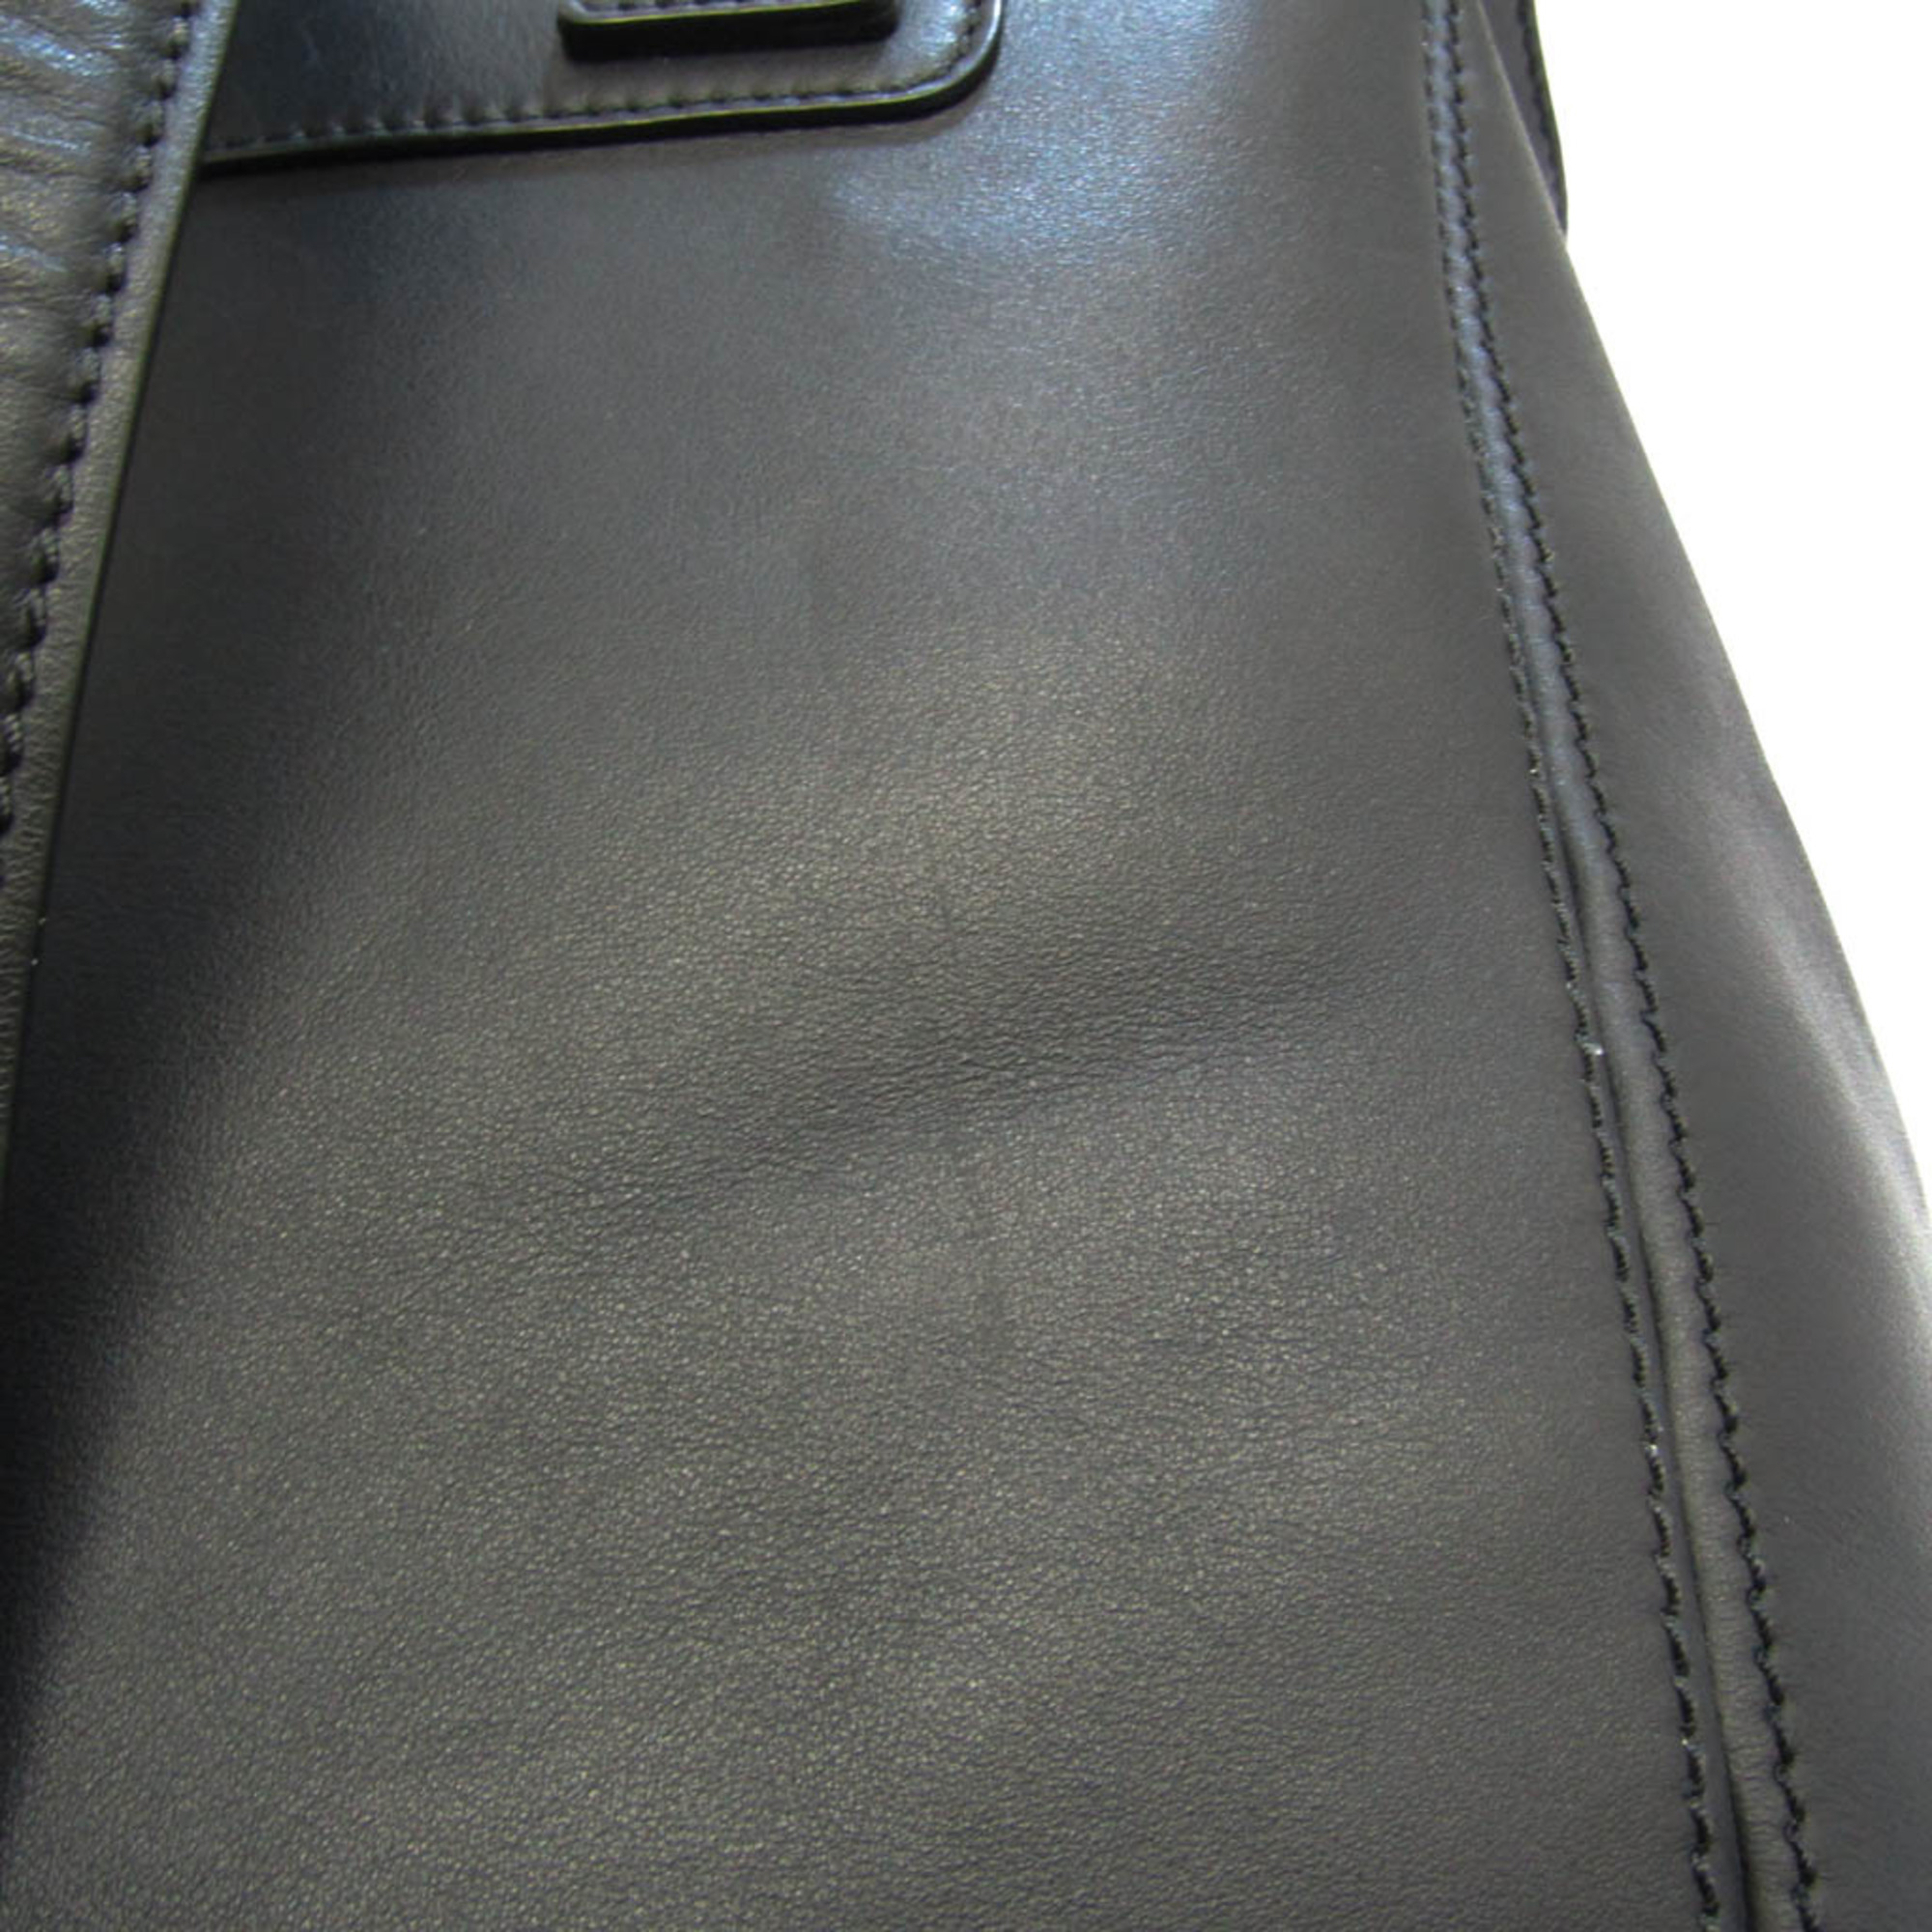 Givenchy PANDORA BB05275683 Women,Men Leather Backpack Black